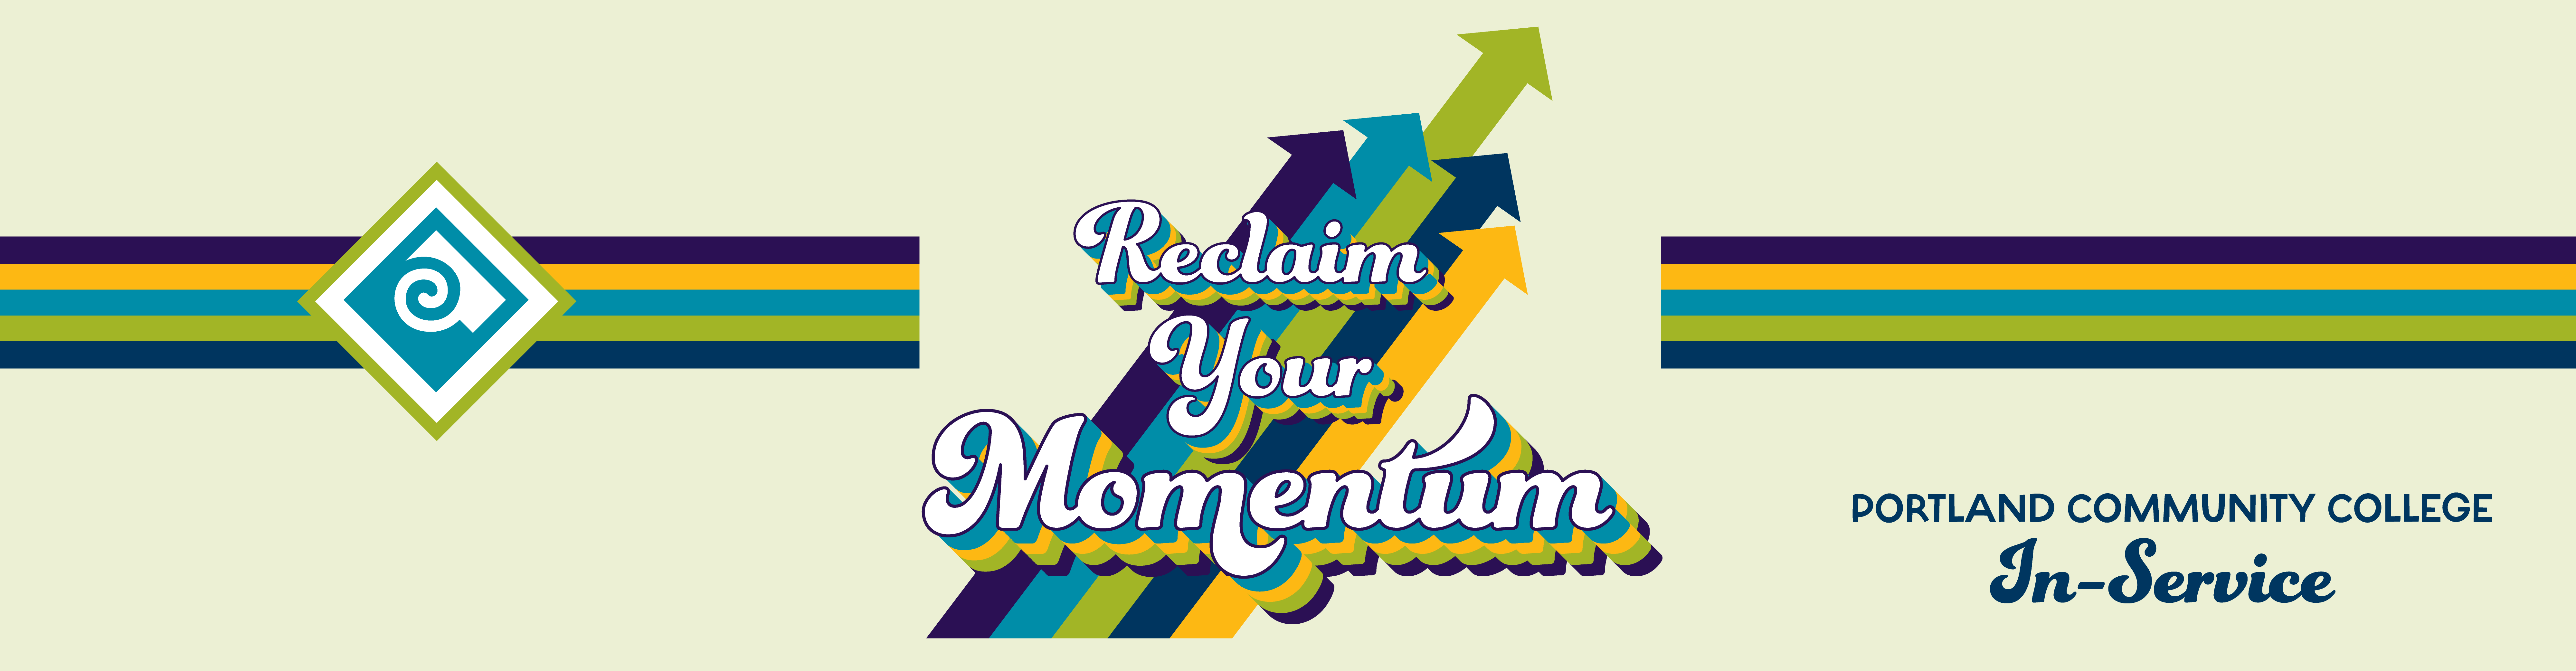 Reclaim your momentum, PCC In-service